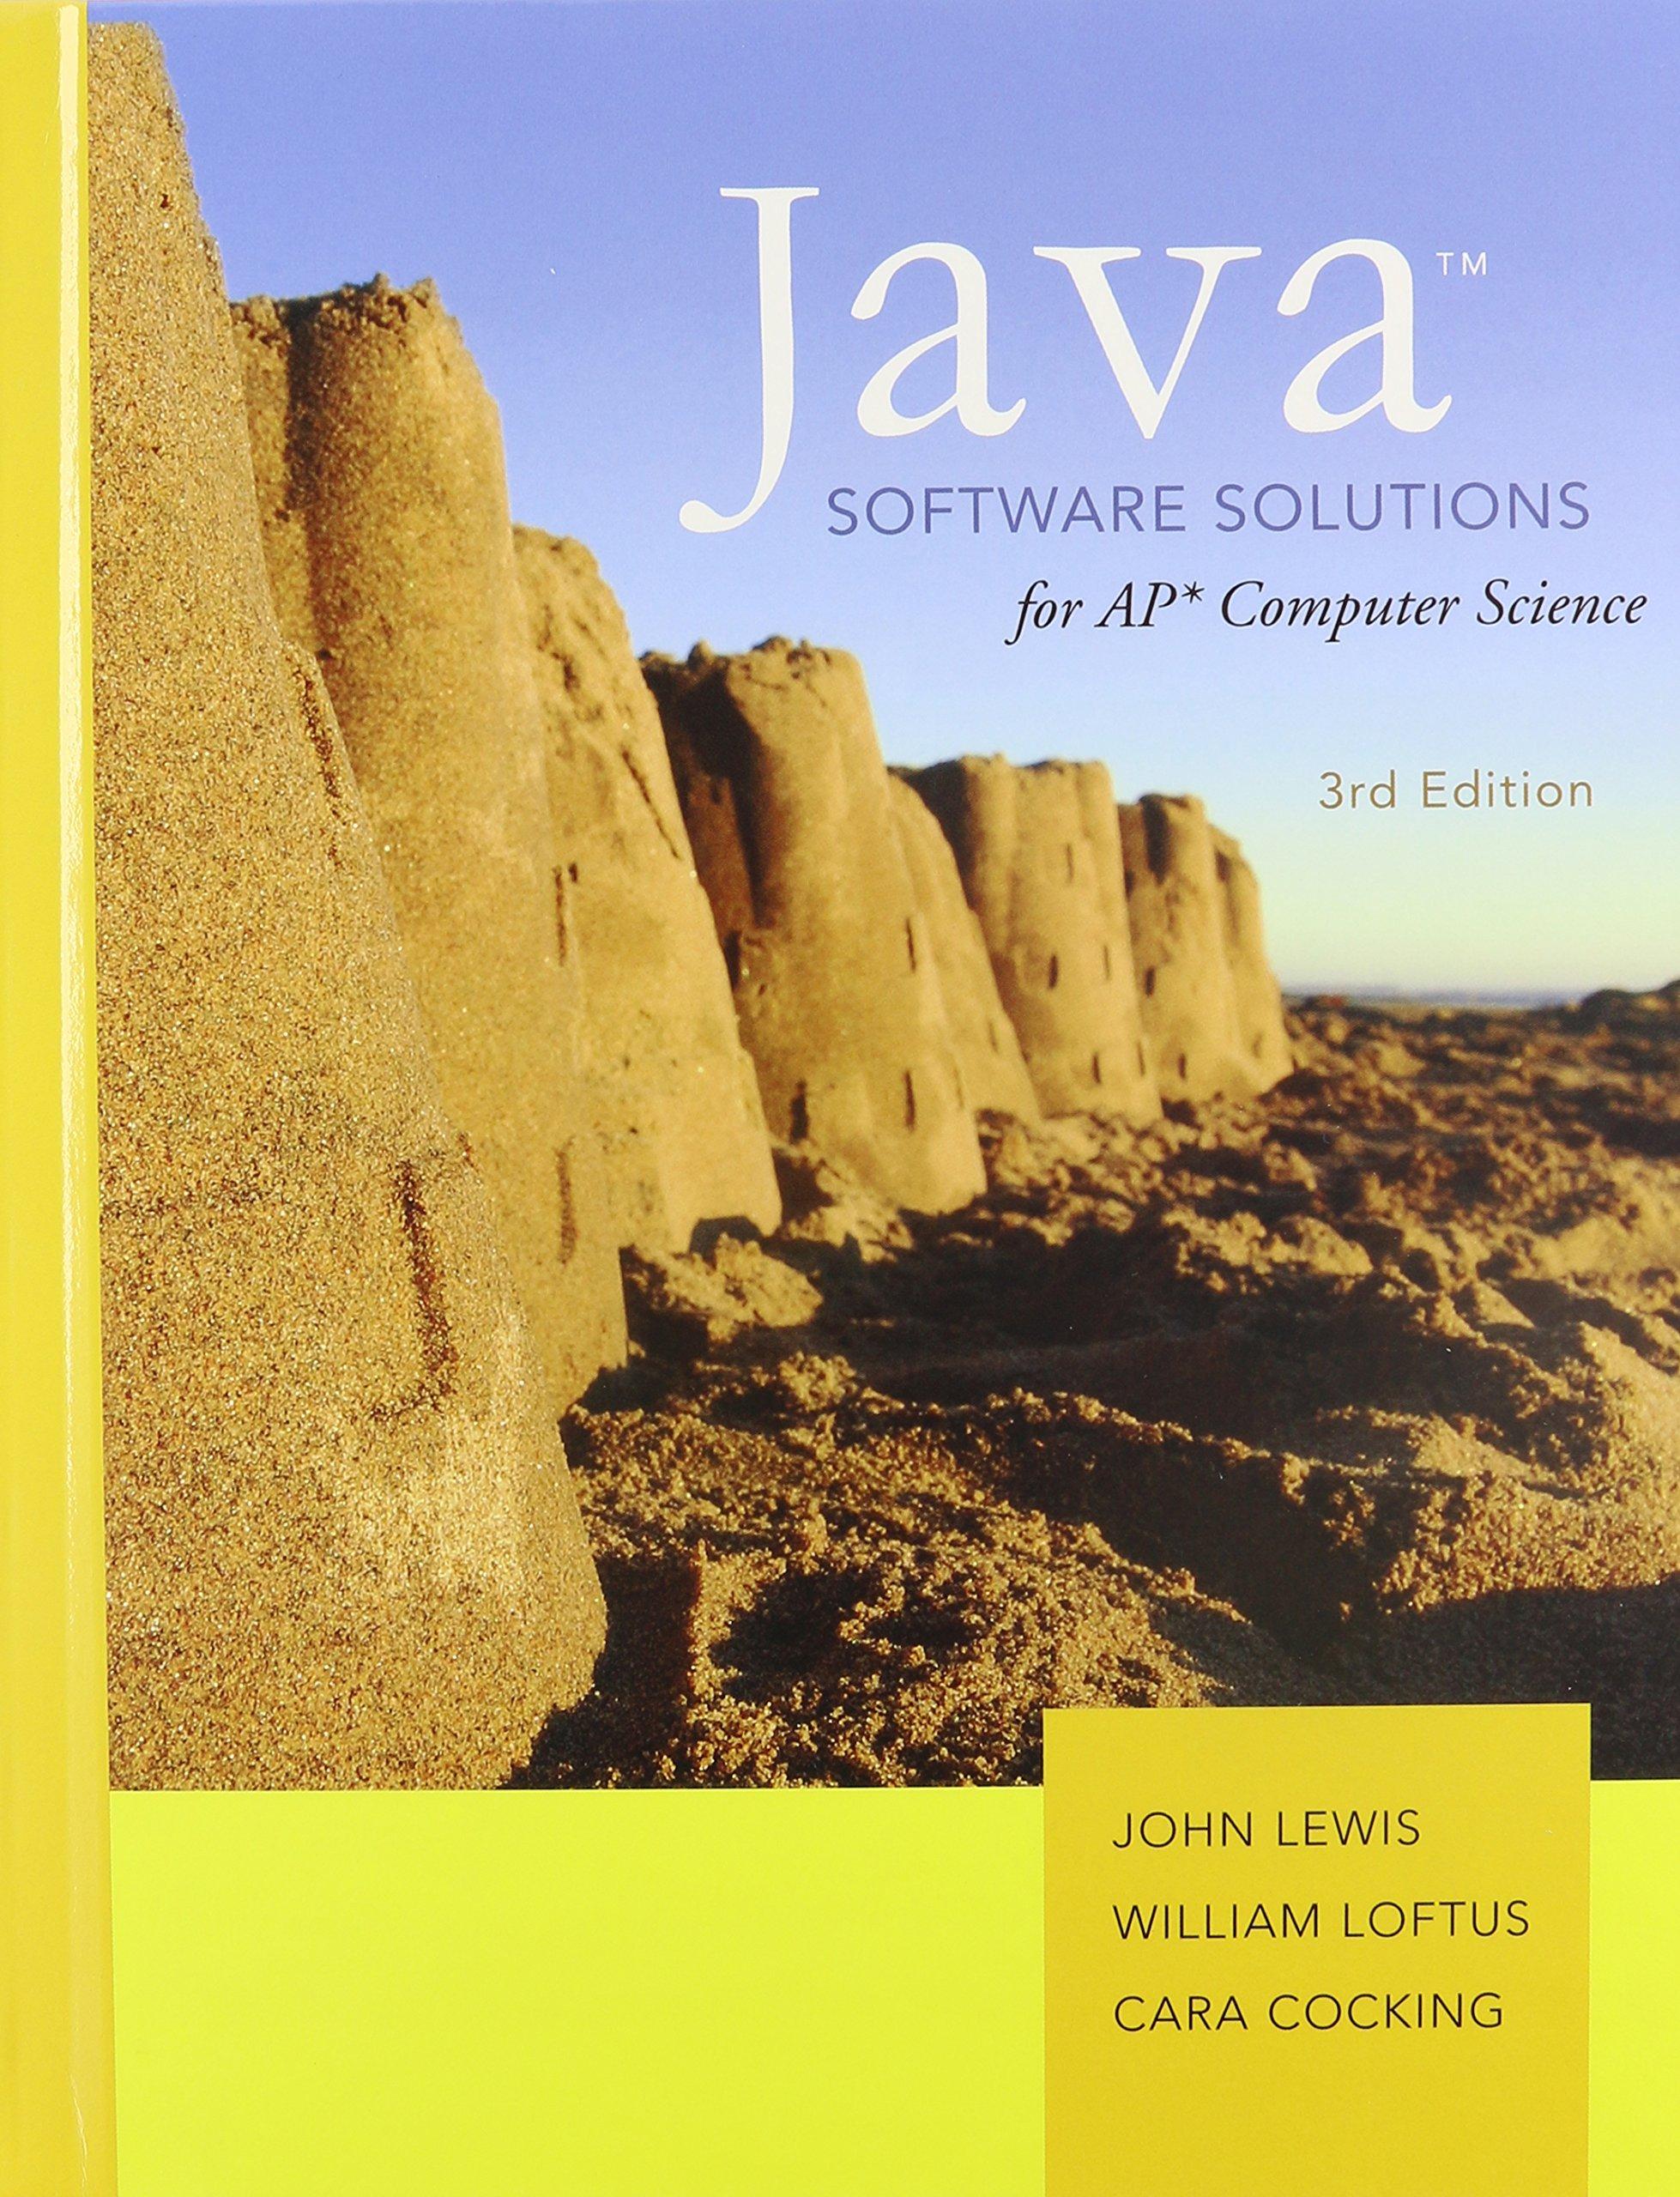 java software solutions ap comp science 3rd edition john lewis, william loftus, cara cocking 0131374699,